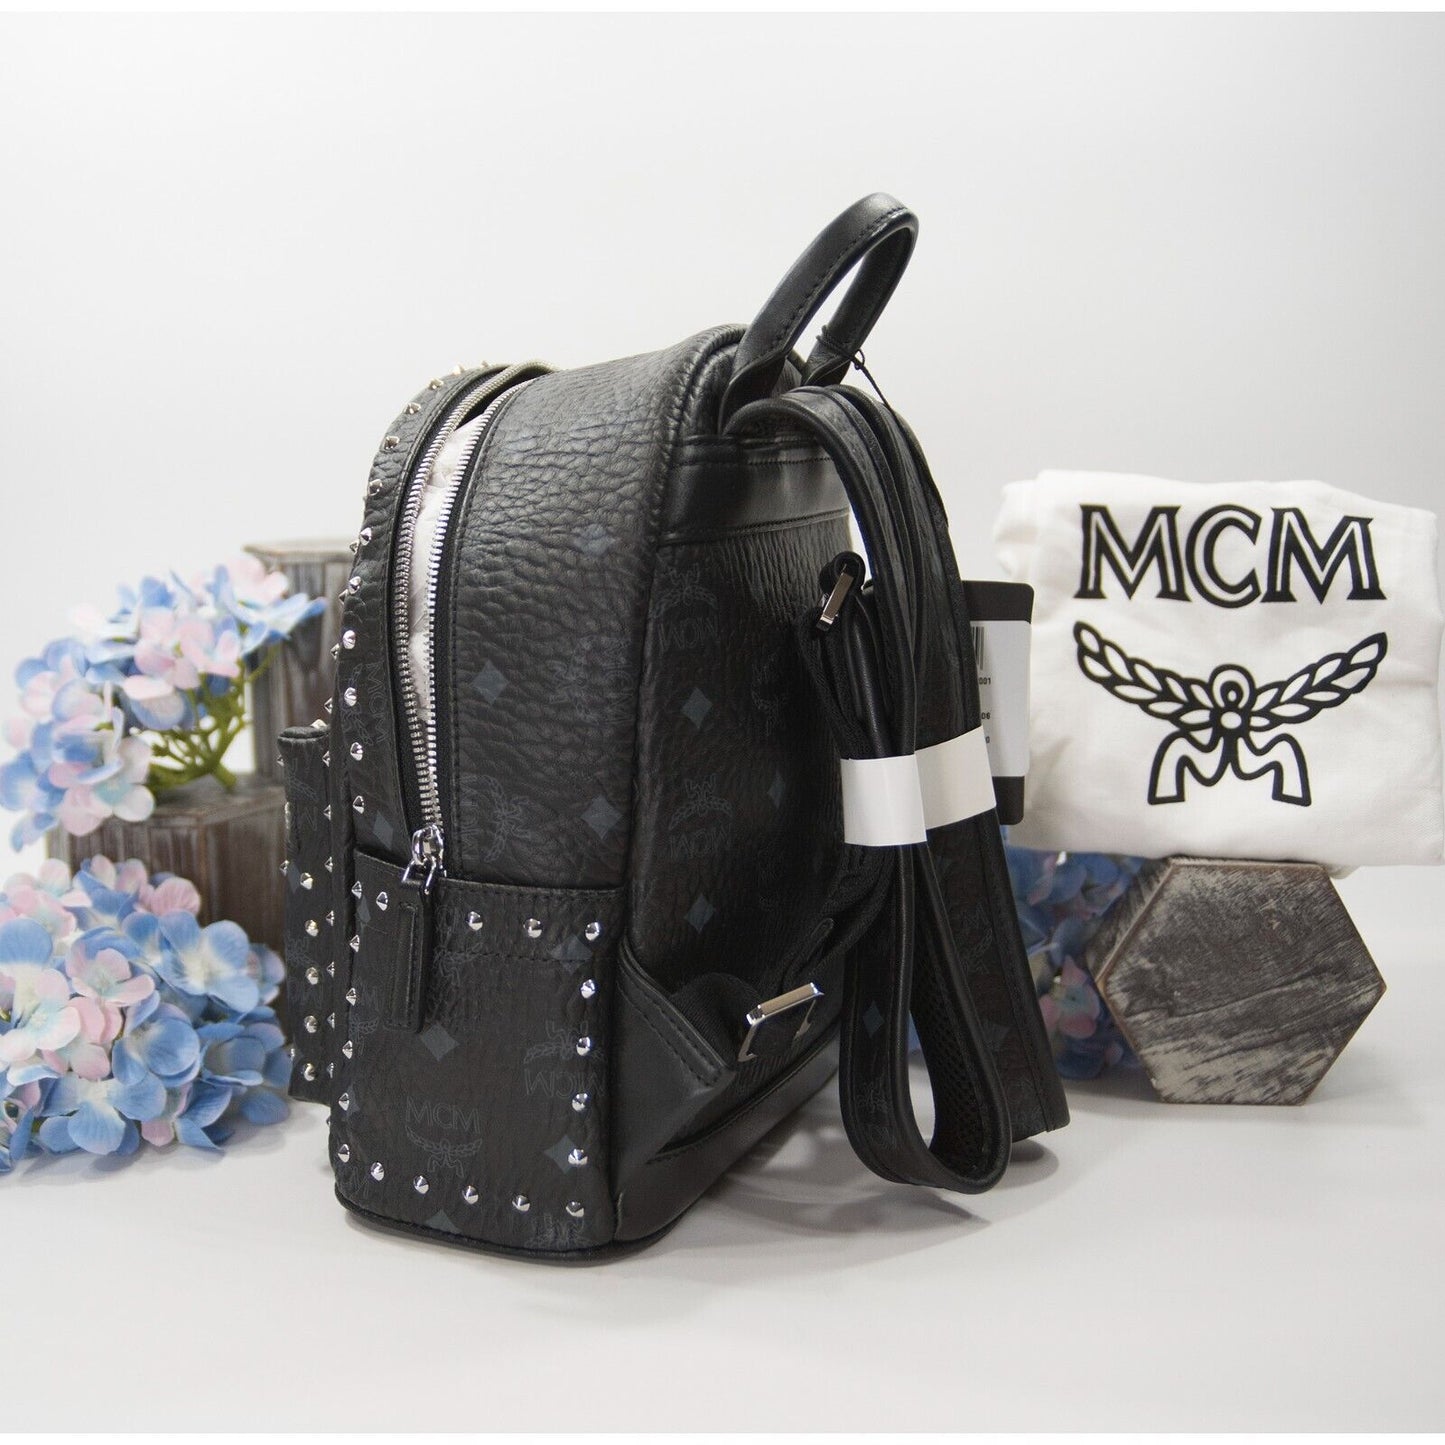 MCM Black Studded Viisetos Leather Backpack Book Bag NWT